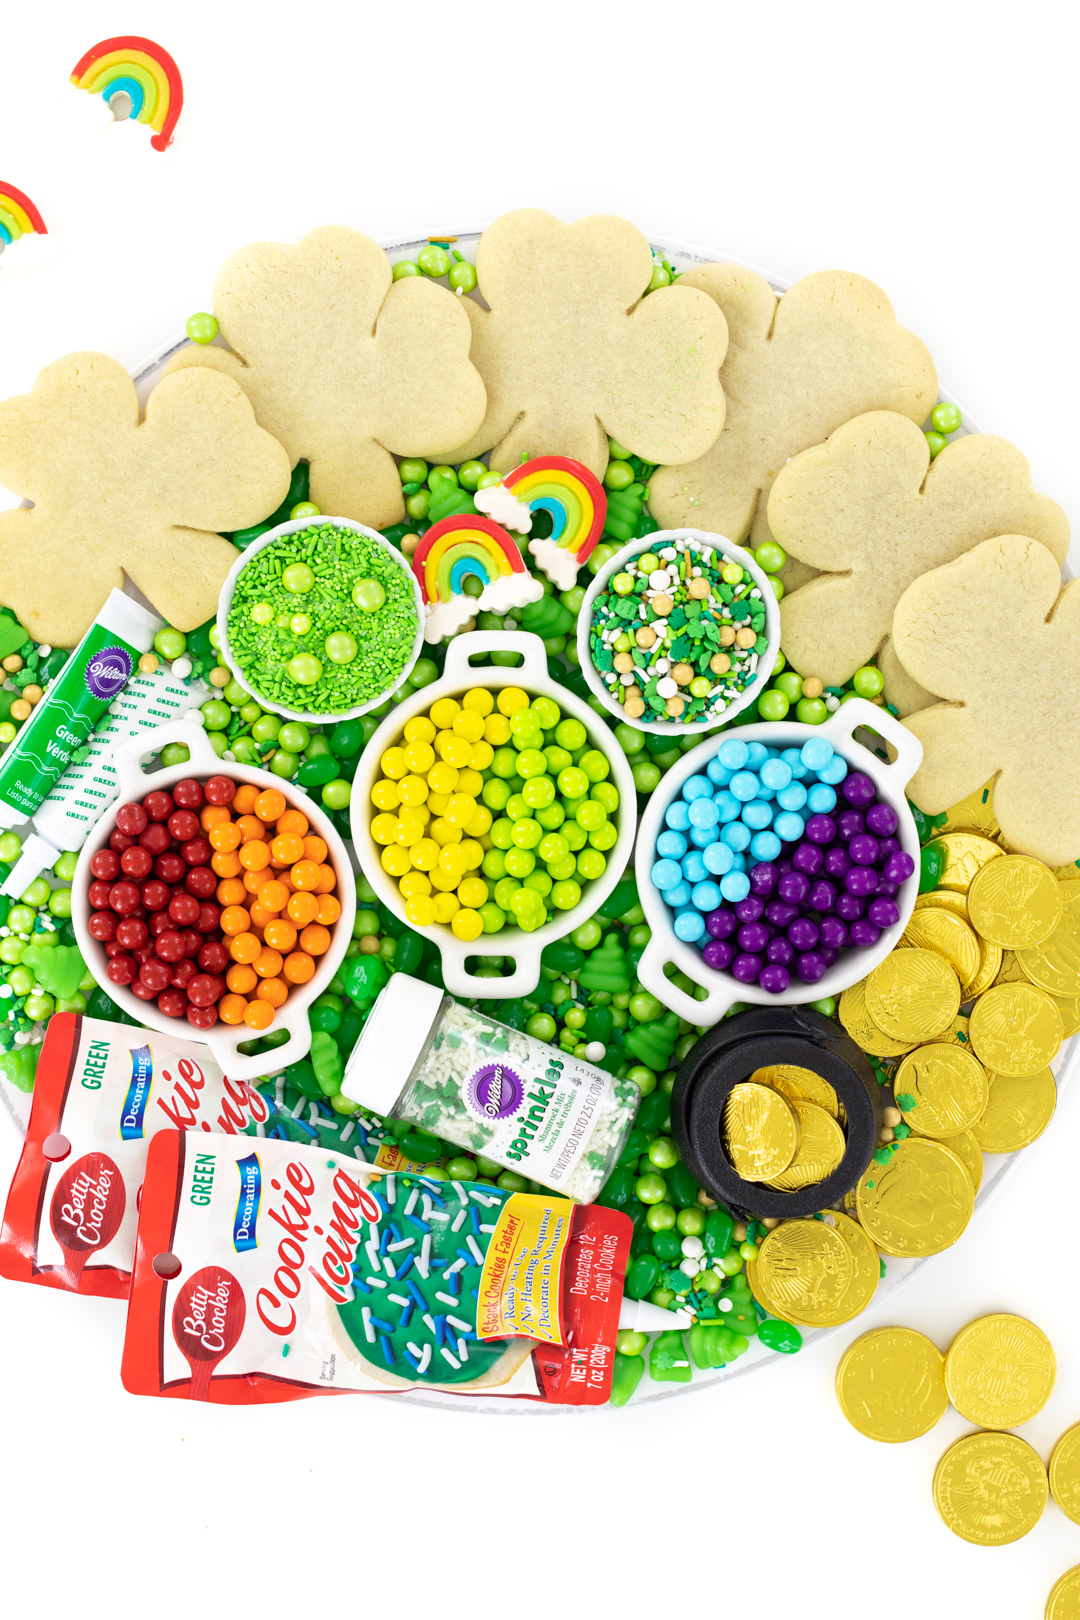 fun rainbow gummy candies, st. patrick's day sprinkles, green betty crocker cookie icing.